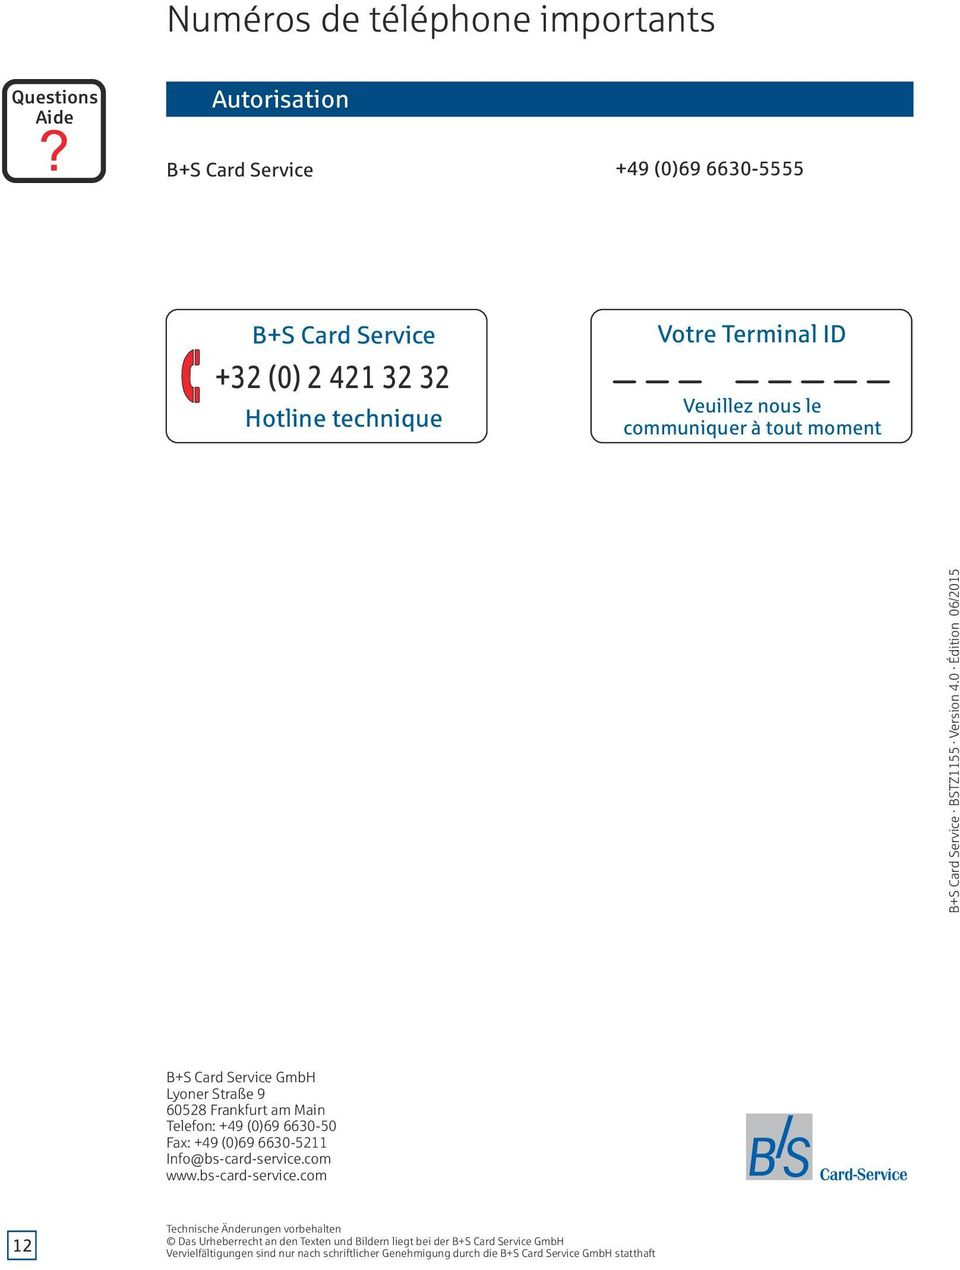 0 Édition 06/2015 B+S Card Service GmbH Lyoner Straße 9 60528 Frankfurt am Main Telefon: +49 (0)69 6630-50 Fax: +49 (0)69 6630-5211 Info@bs-card-service.com www.